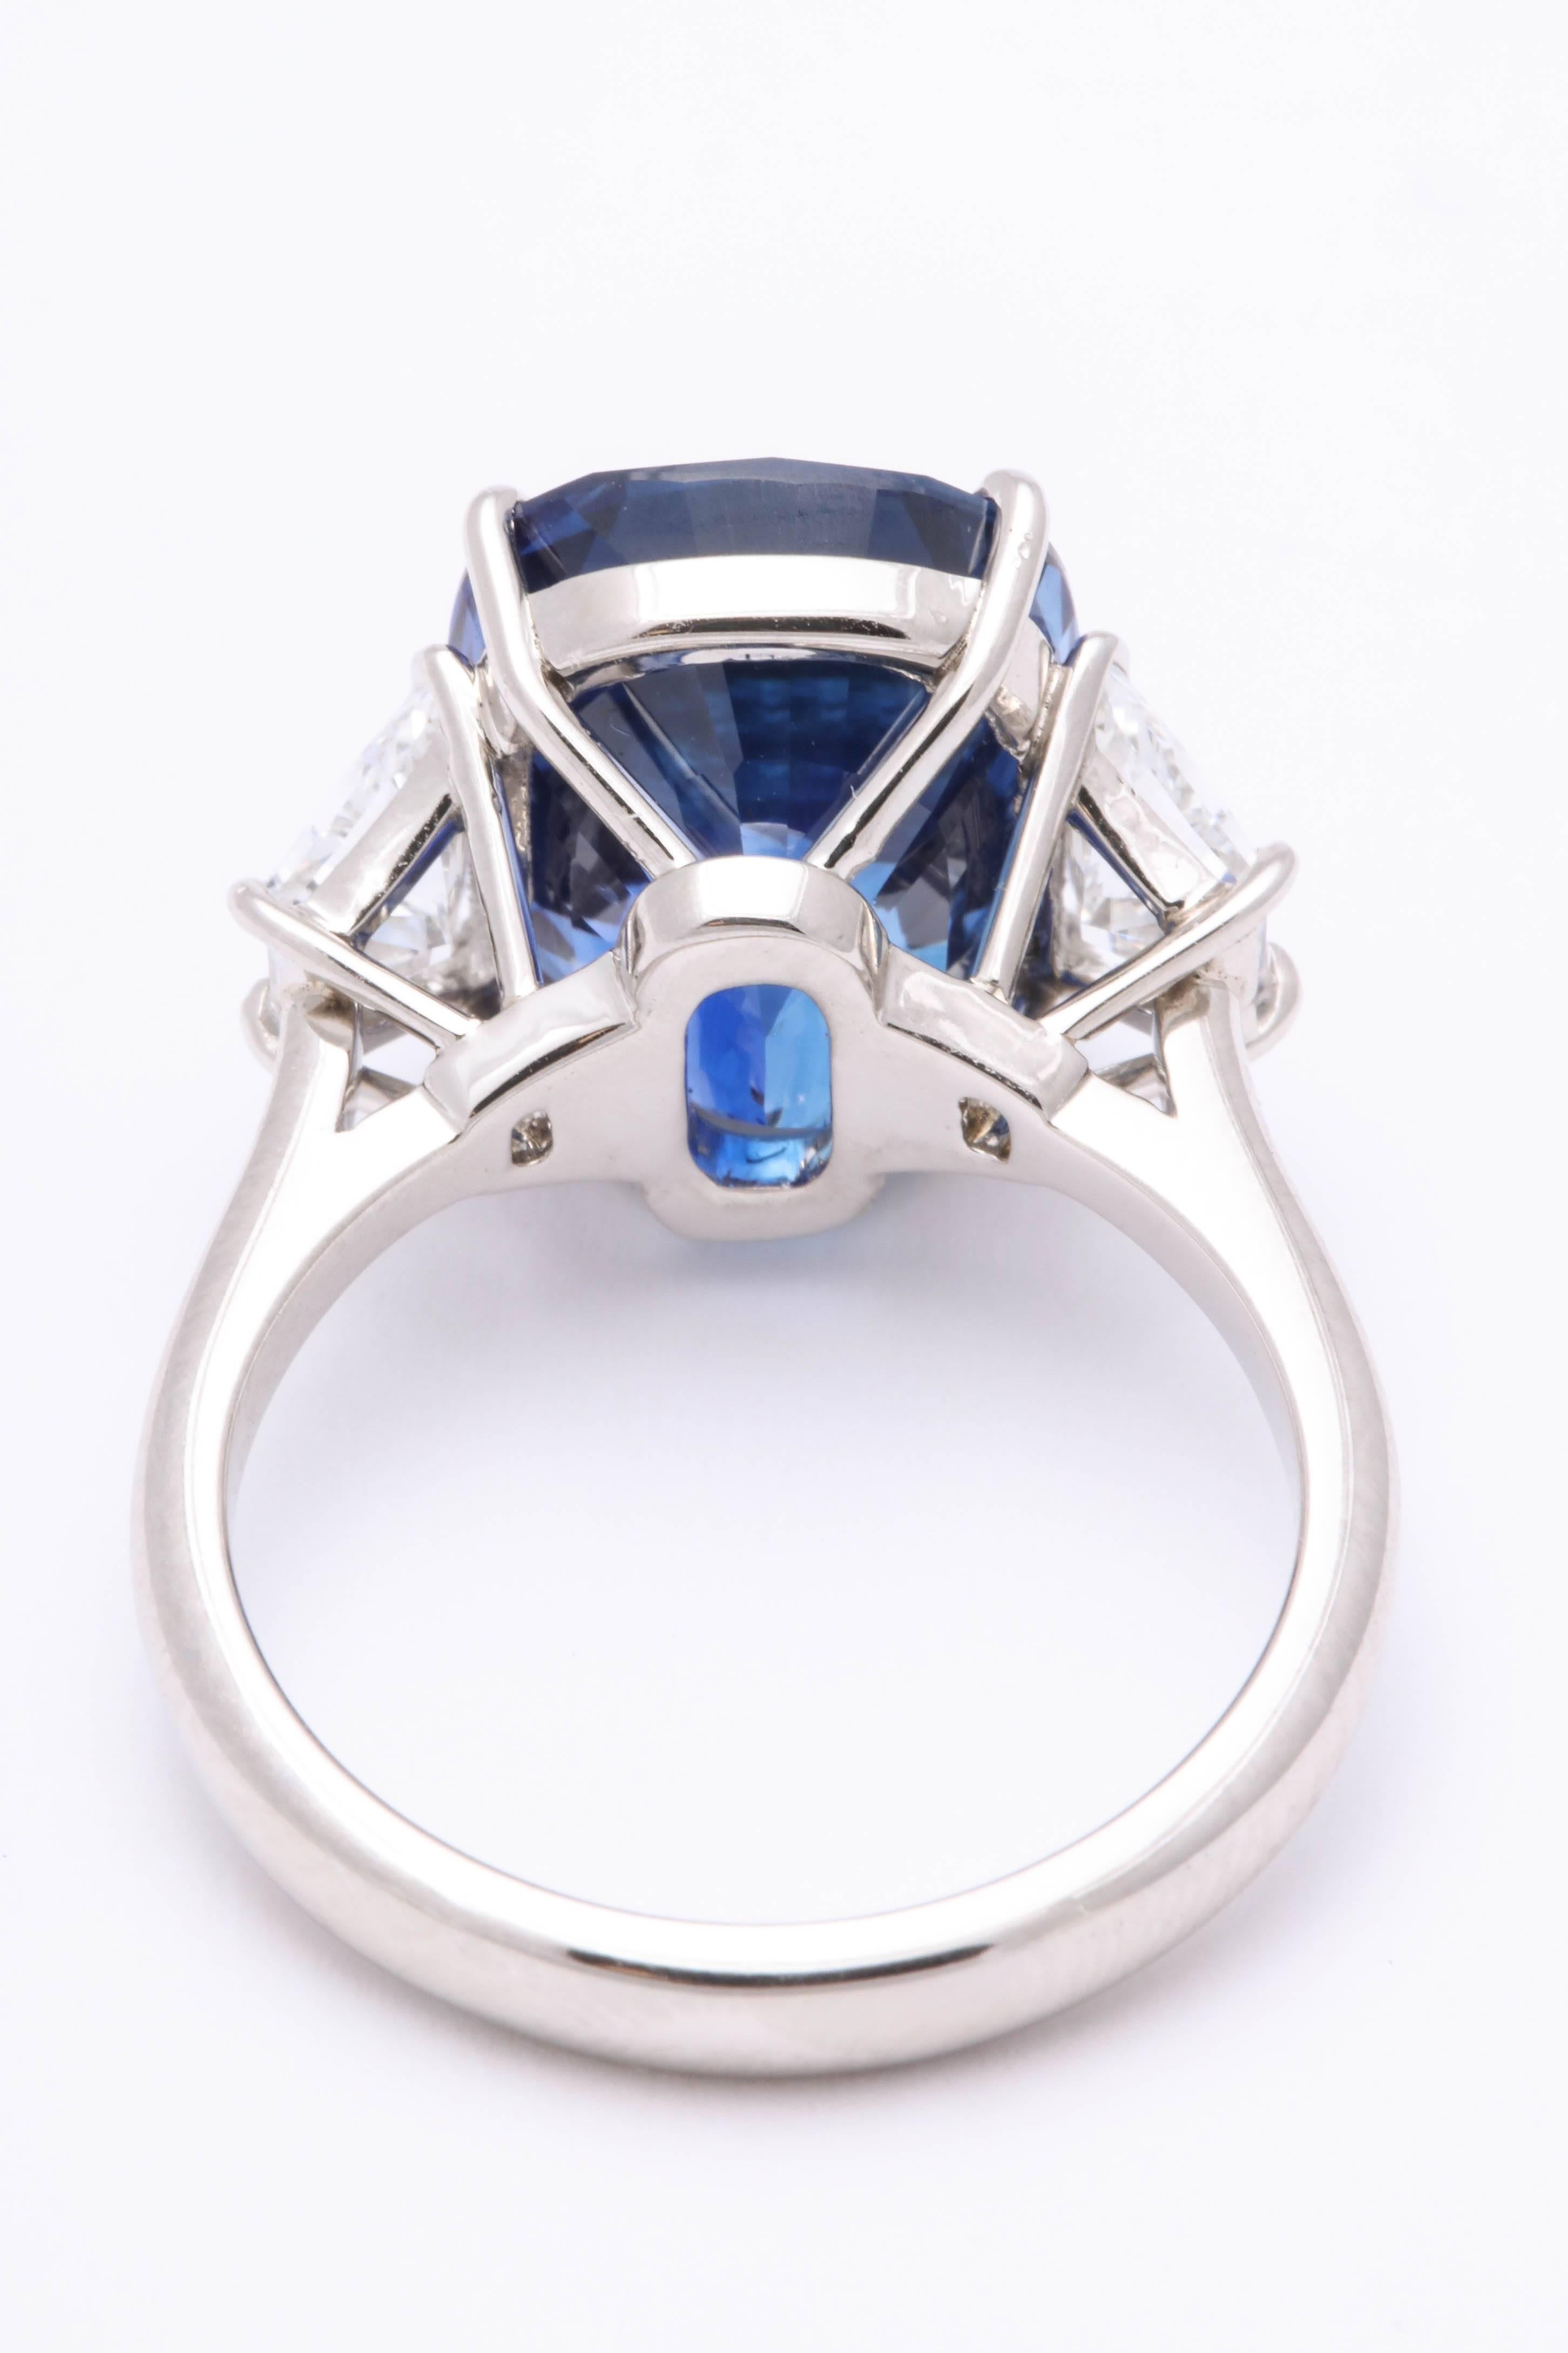 10 carat blue sapphire